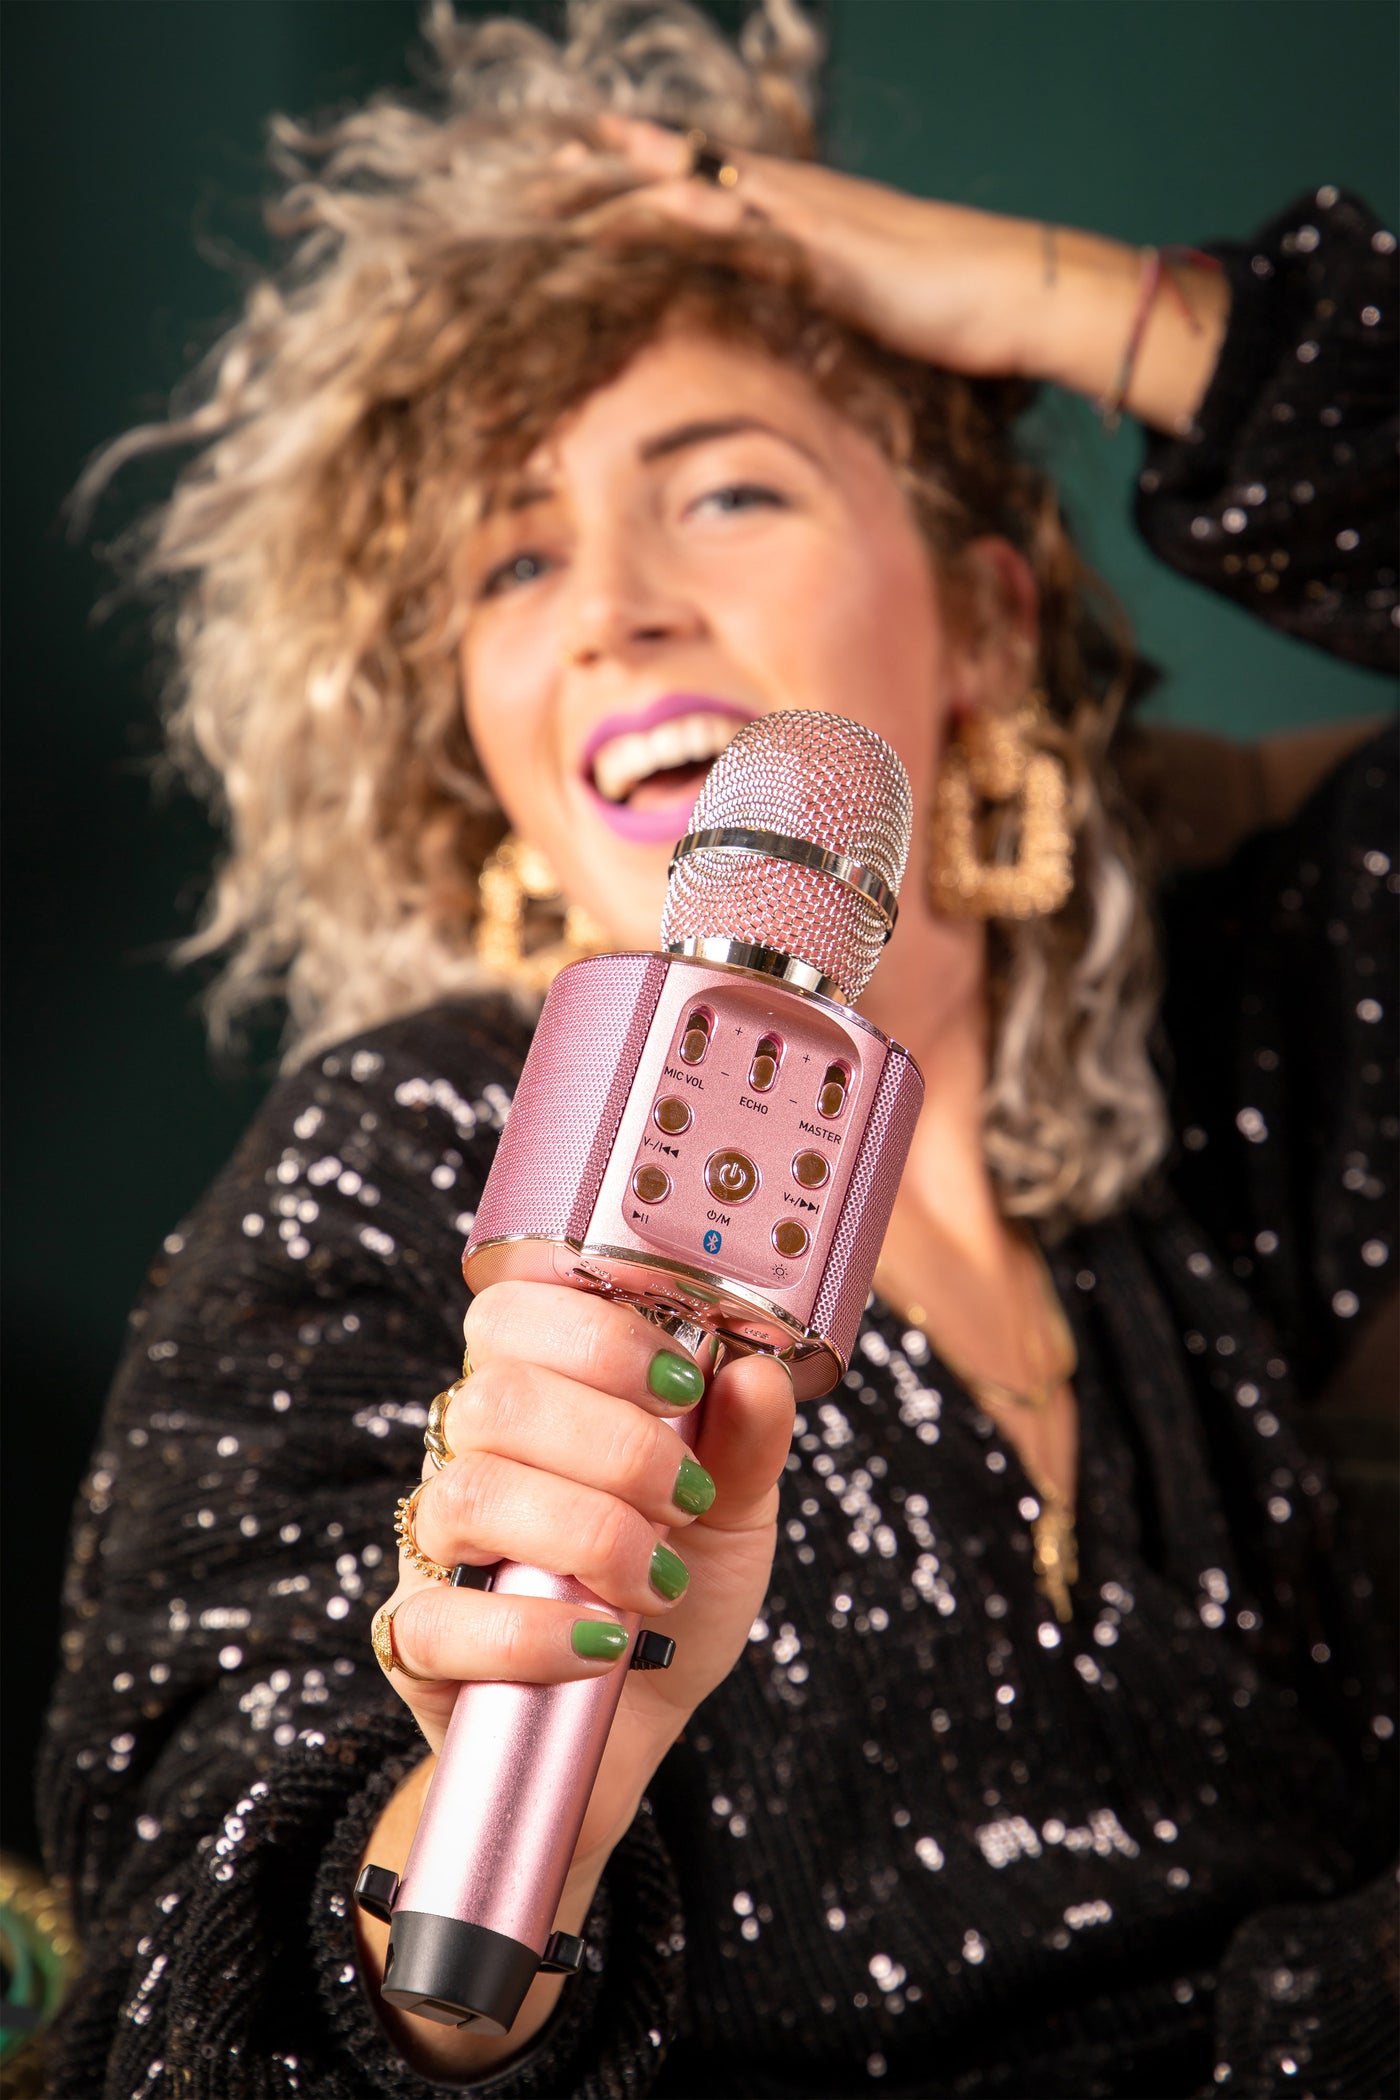 LENCO BMC-090PK - Bluetooth® Karaoke microphone with speaker & lighting - Pink